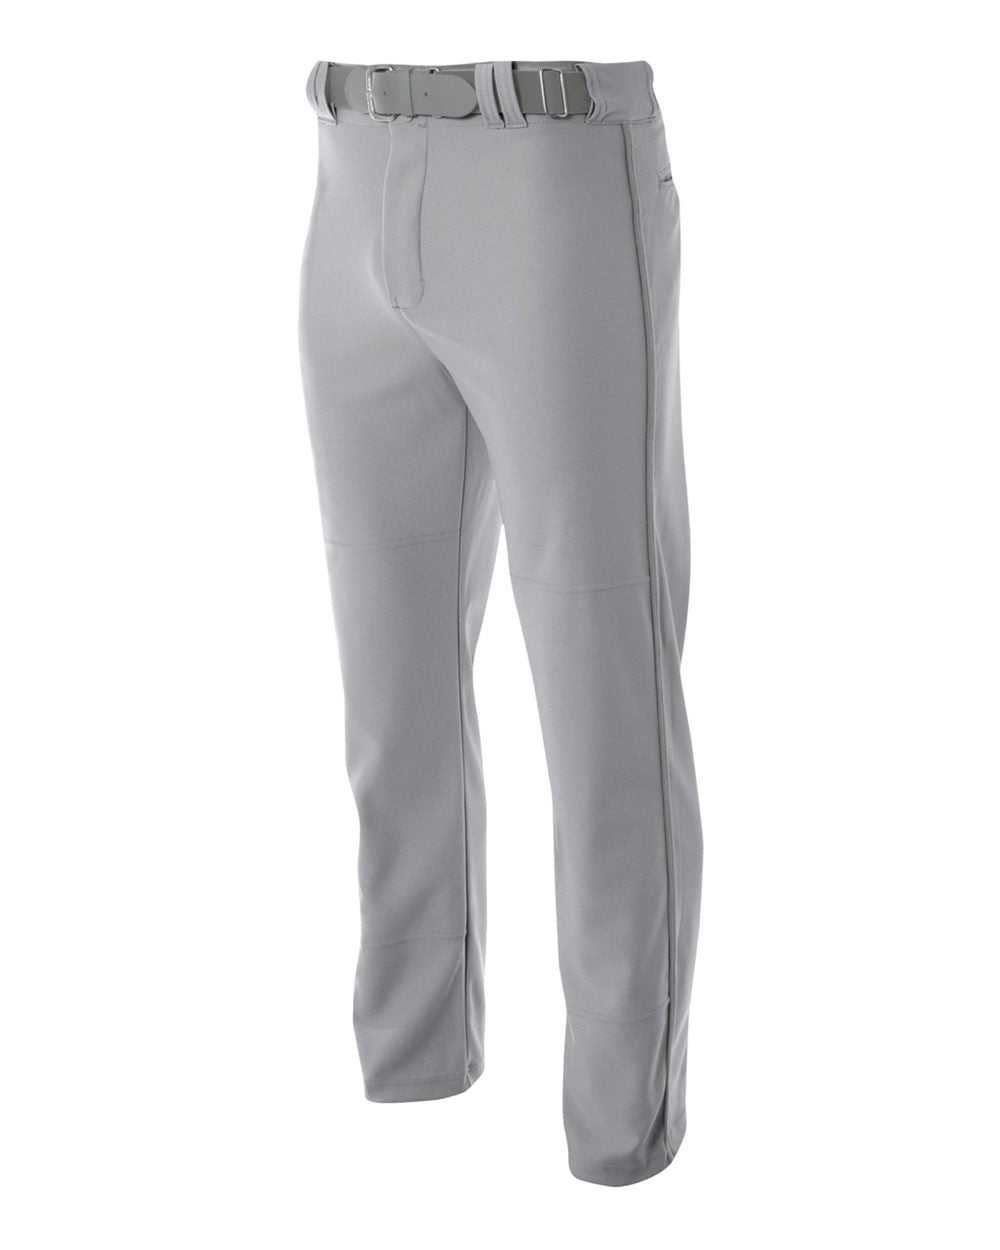 A4 N6162 Pro Style Open Bottom Baggy Cut Baseball Pant - Gray - HIT a Double